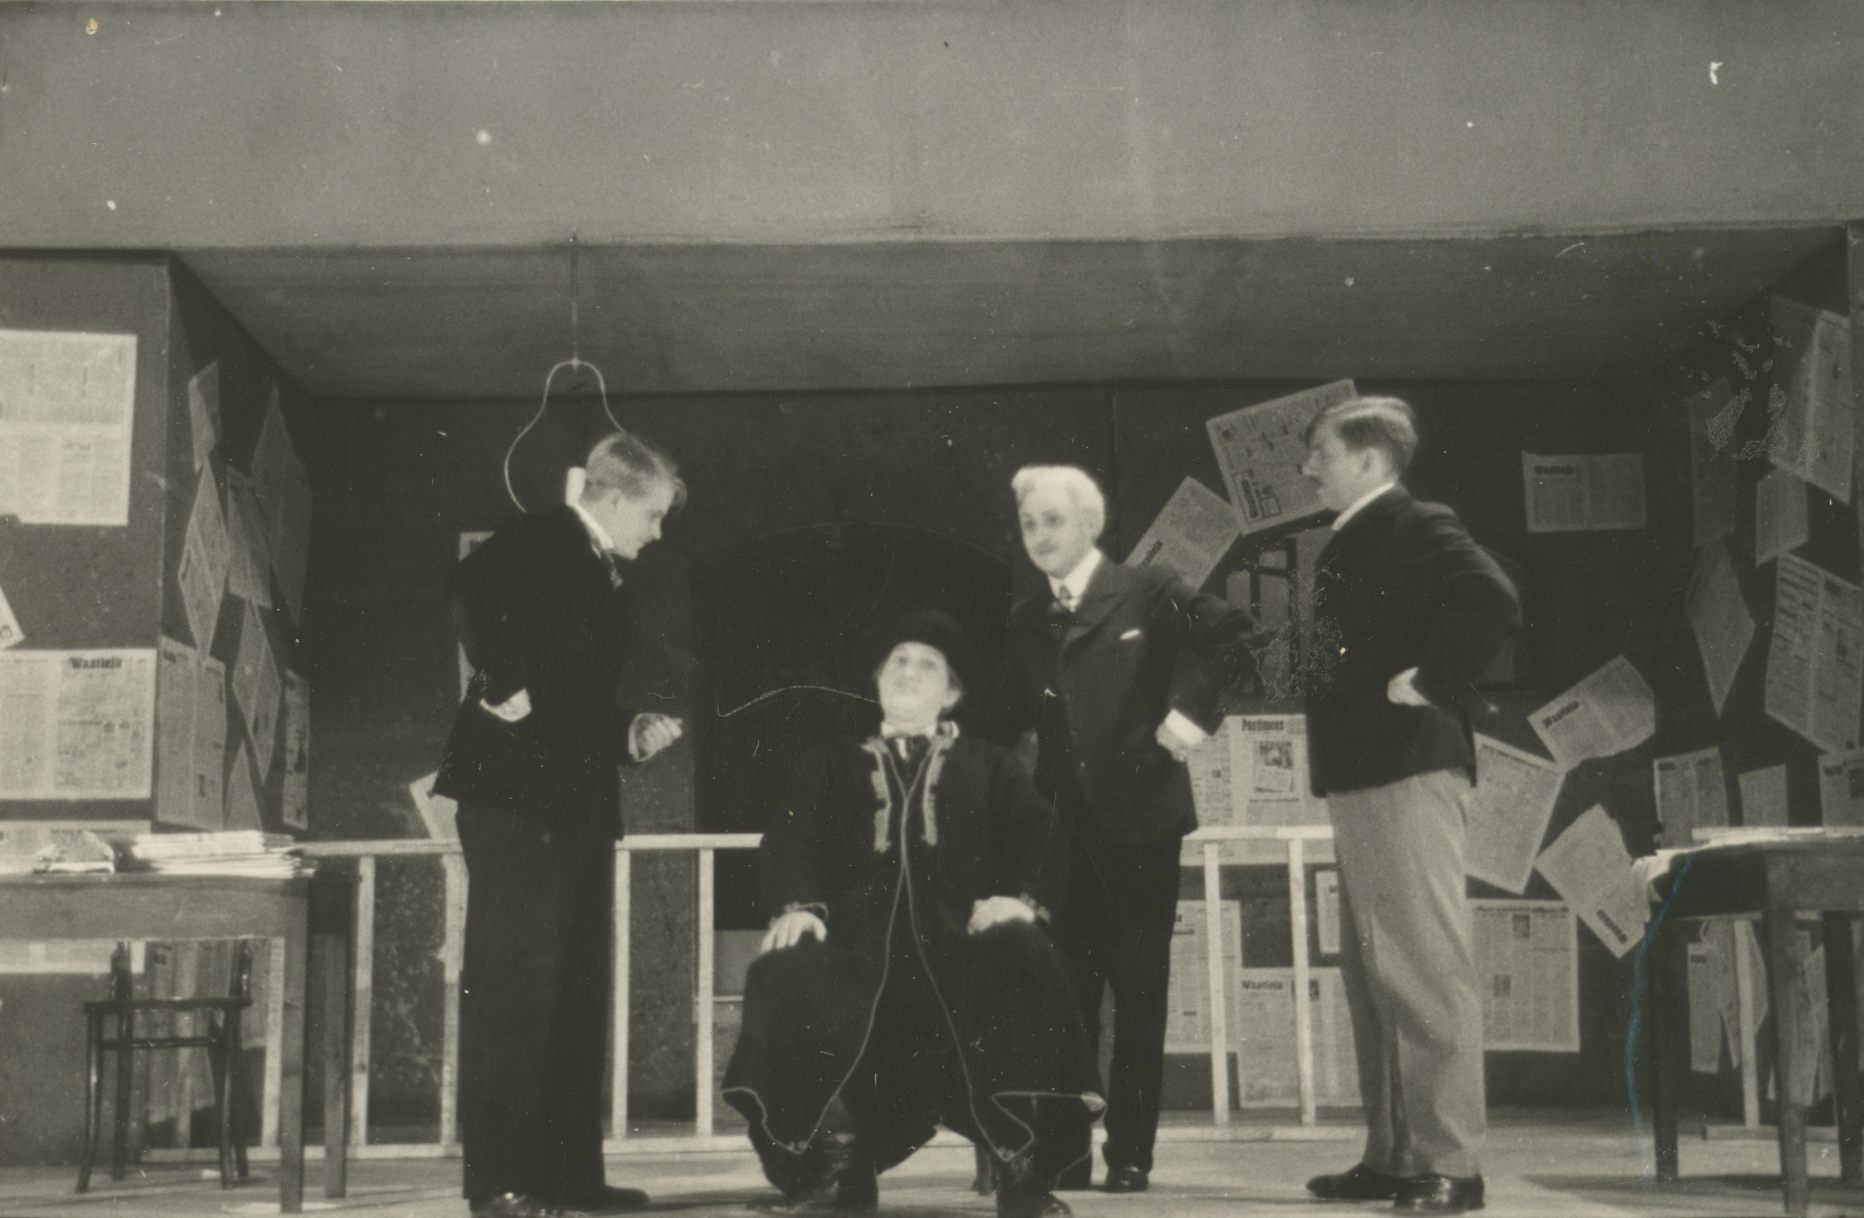 A. Kitzbergi - J. Simmi singing game "Shooting in Vanemuise" in 1938.